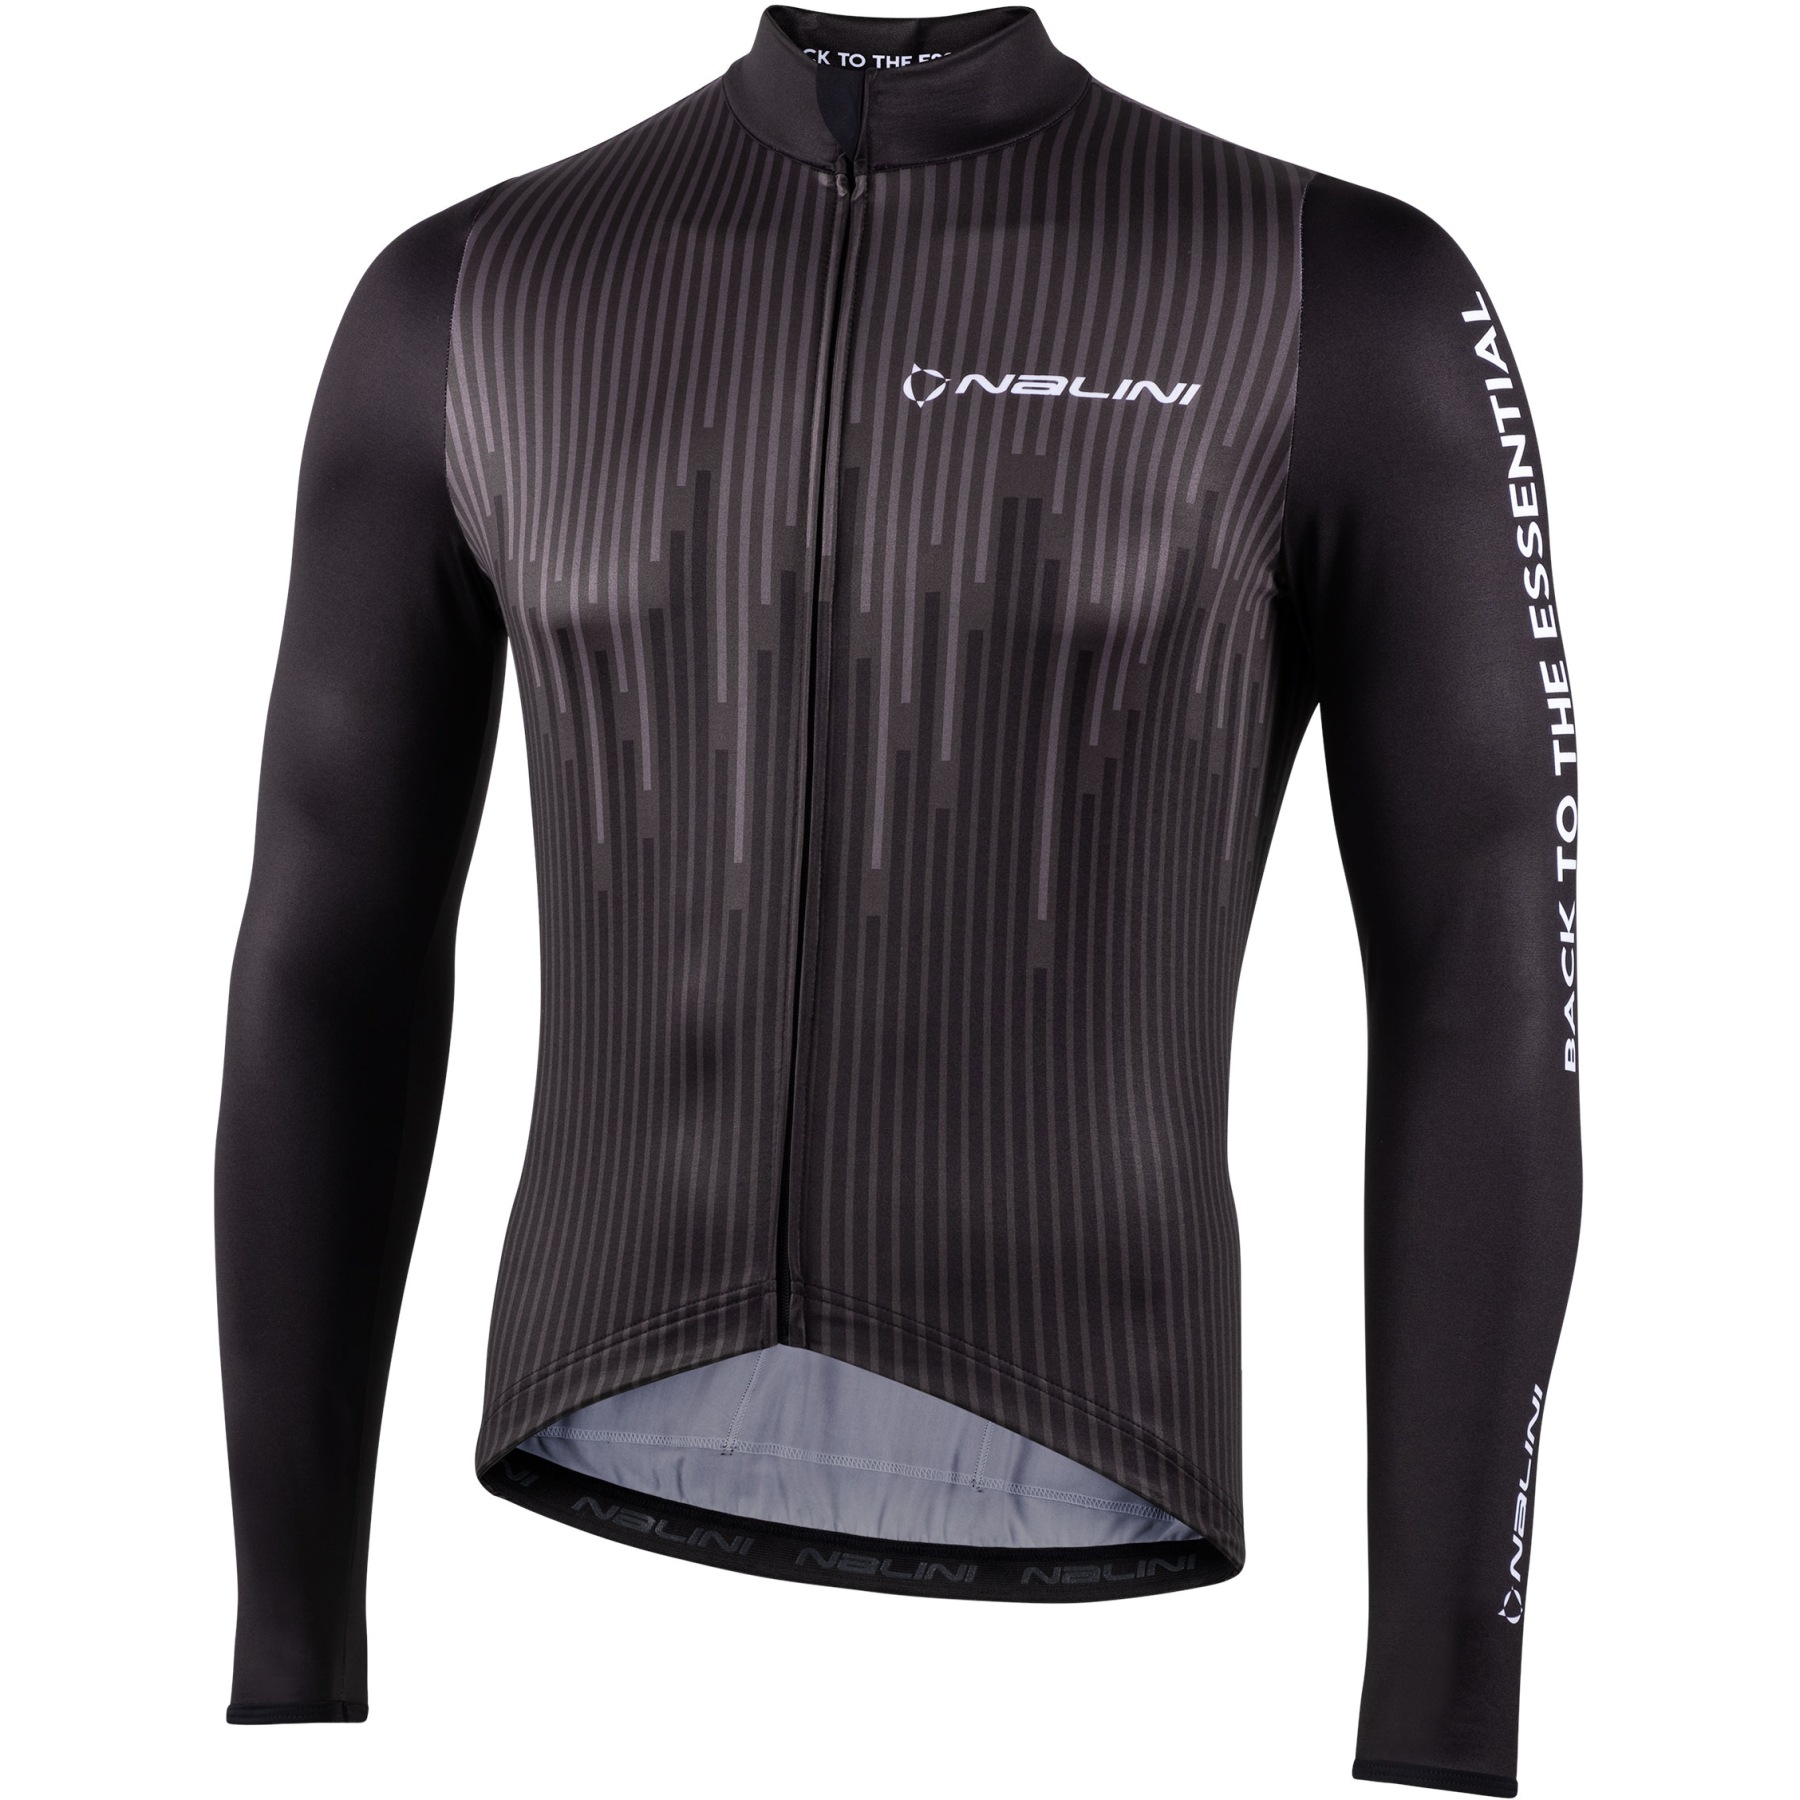 Productfoto van Nalini New Fit Long Sleeve Jersey - grey/black 4000